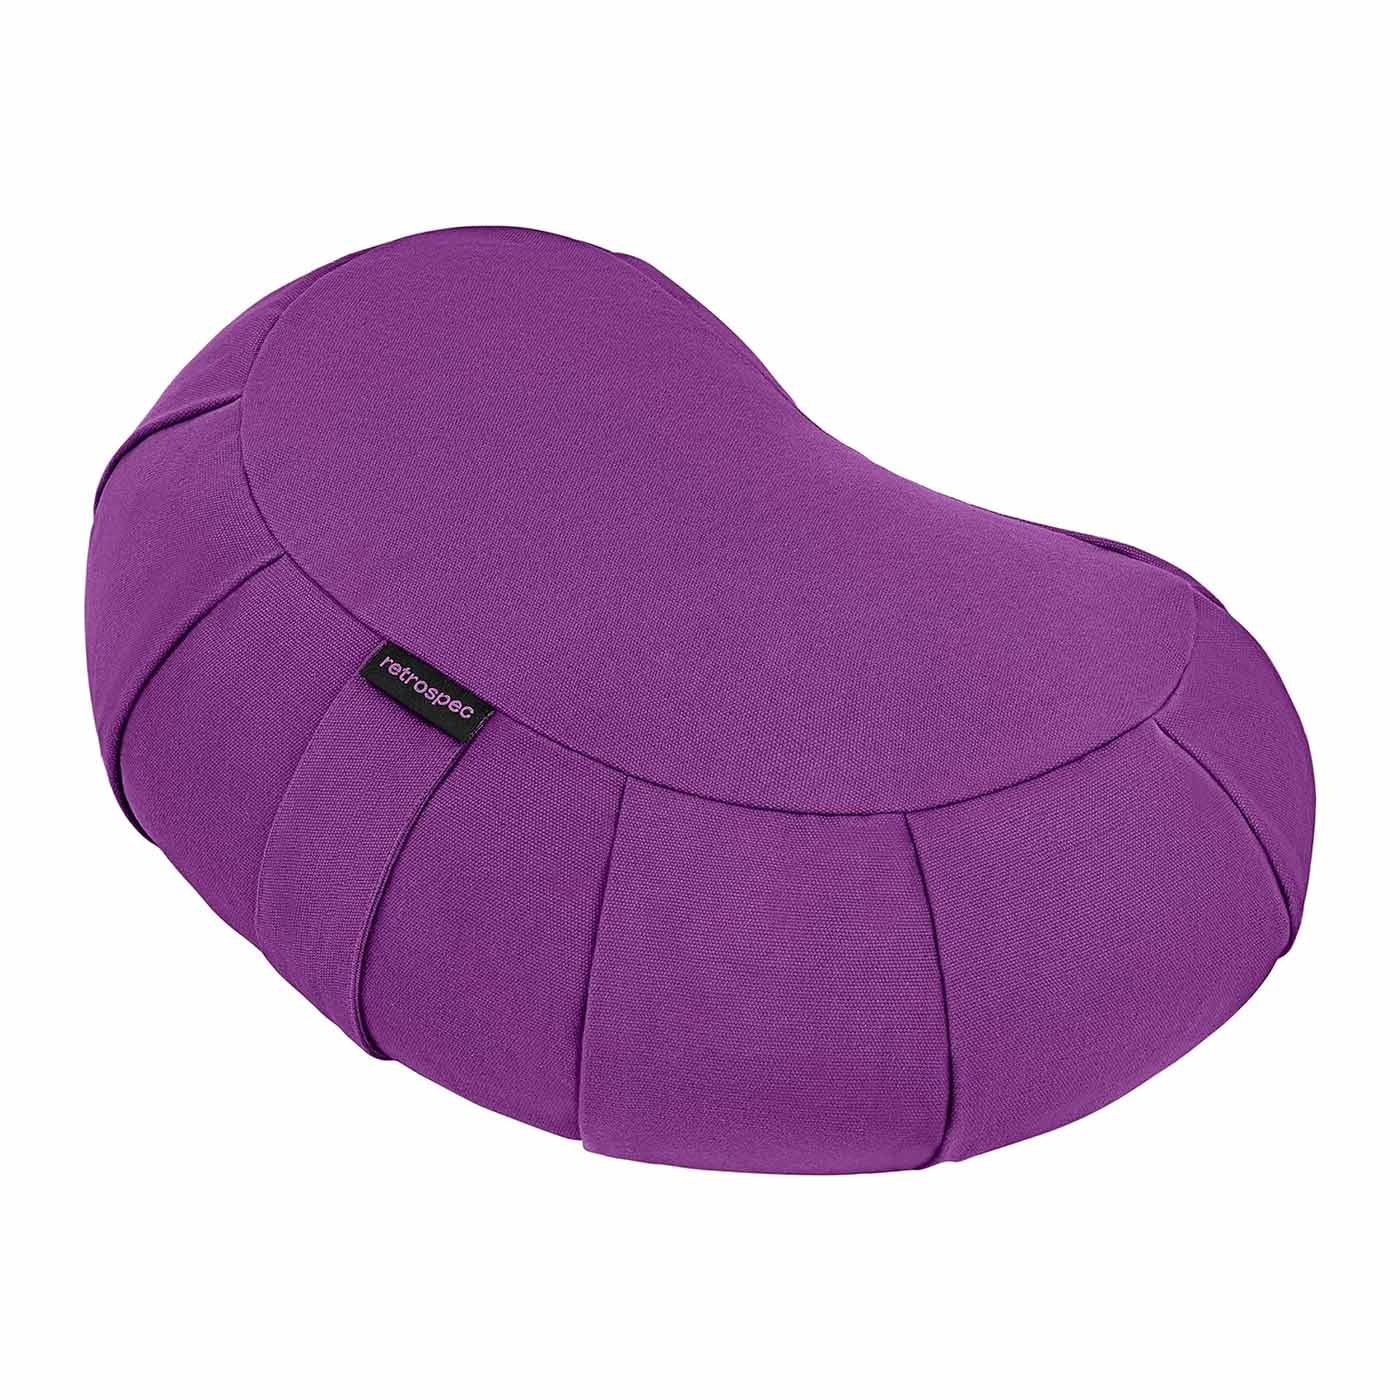 Meditation Cushion, Yoga Pillow Filled w/Buckwheat Hulls